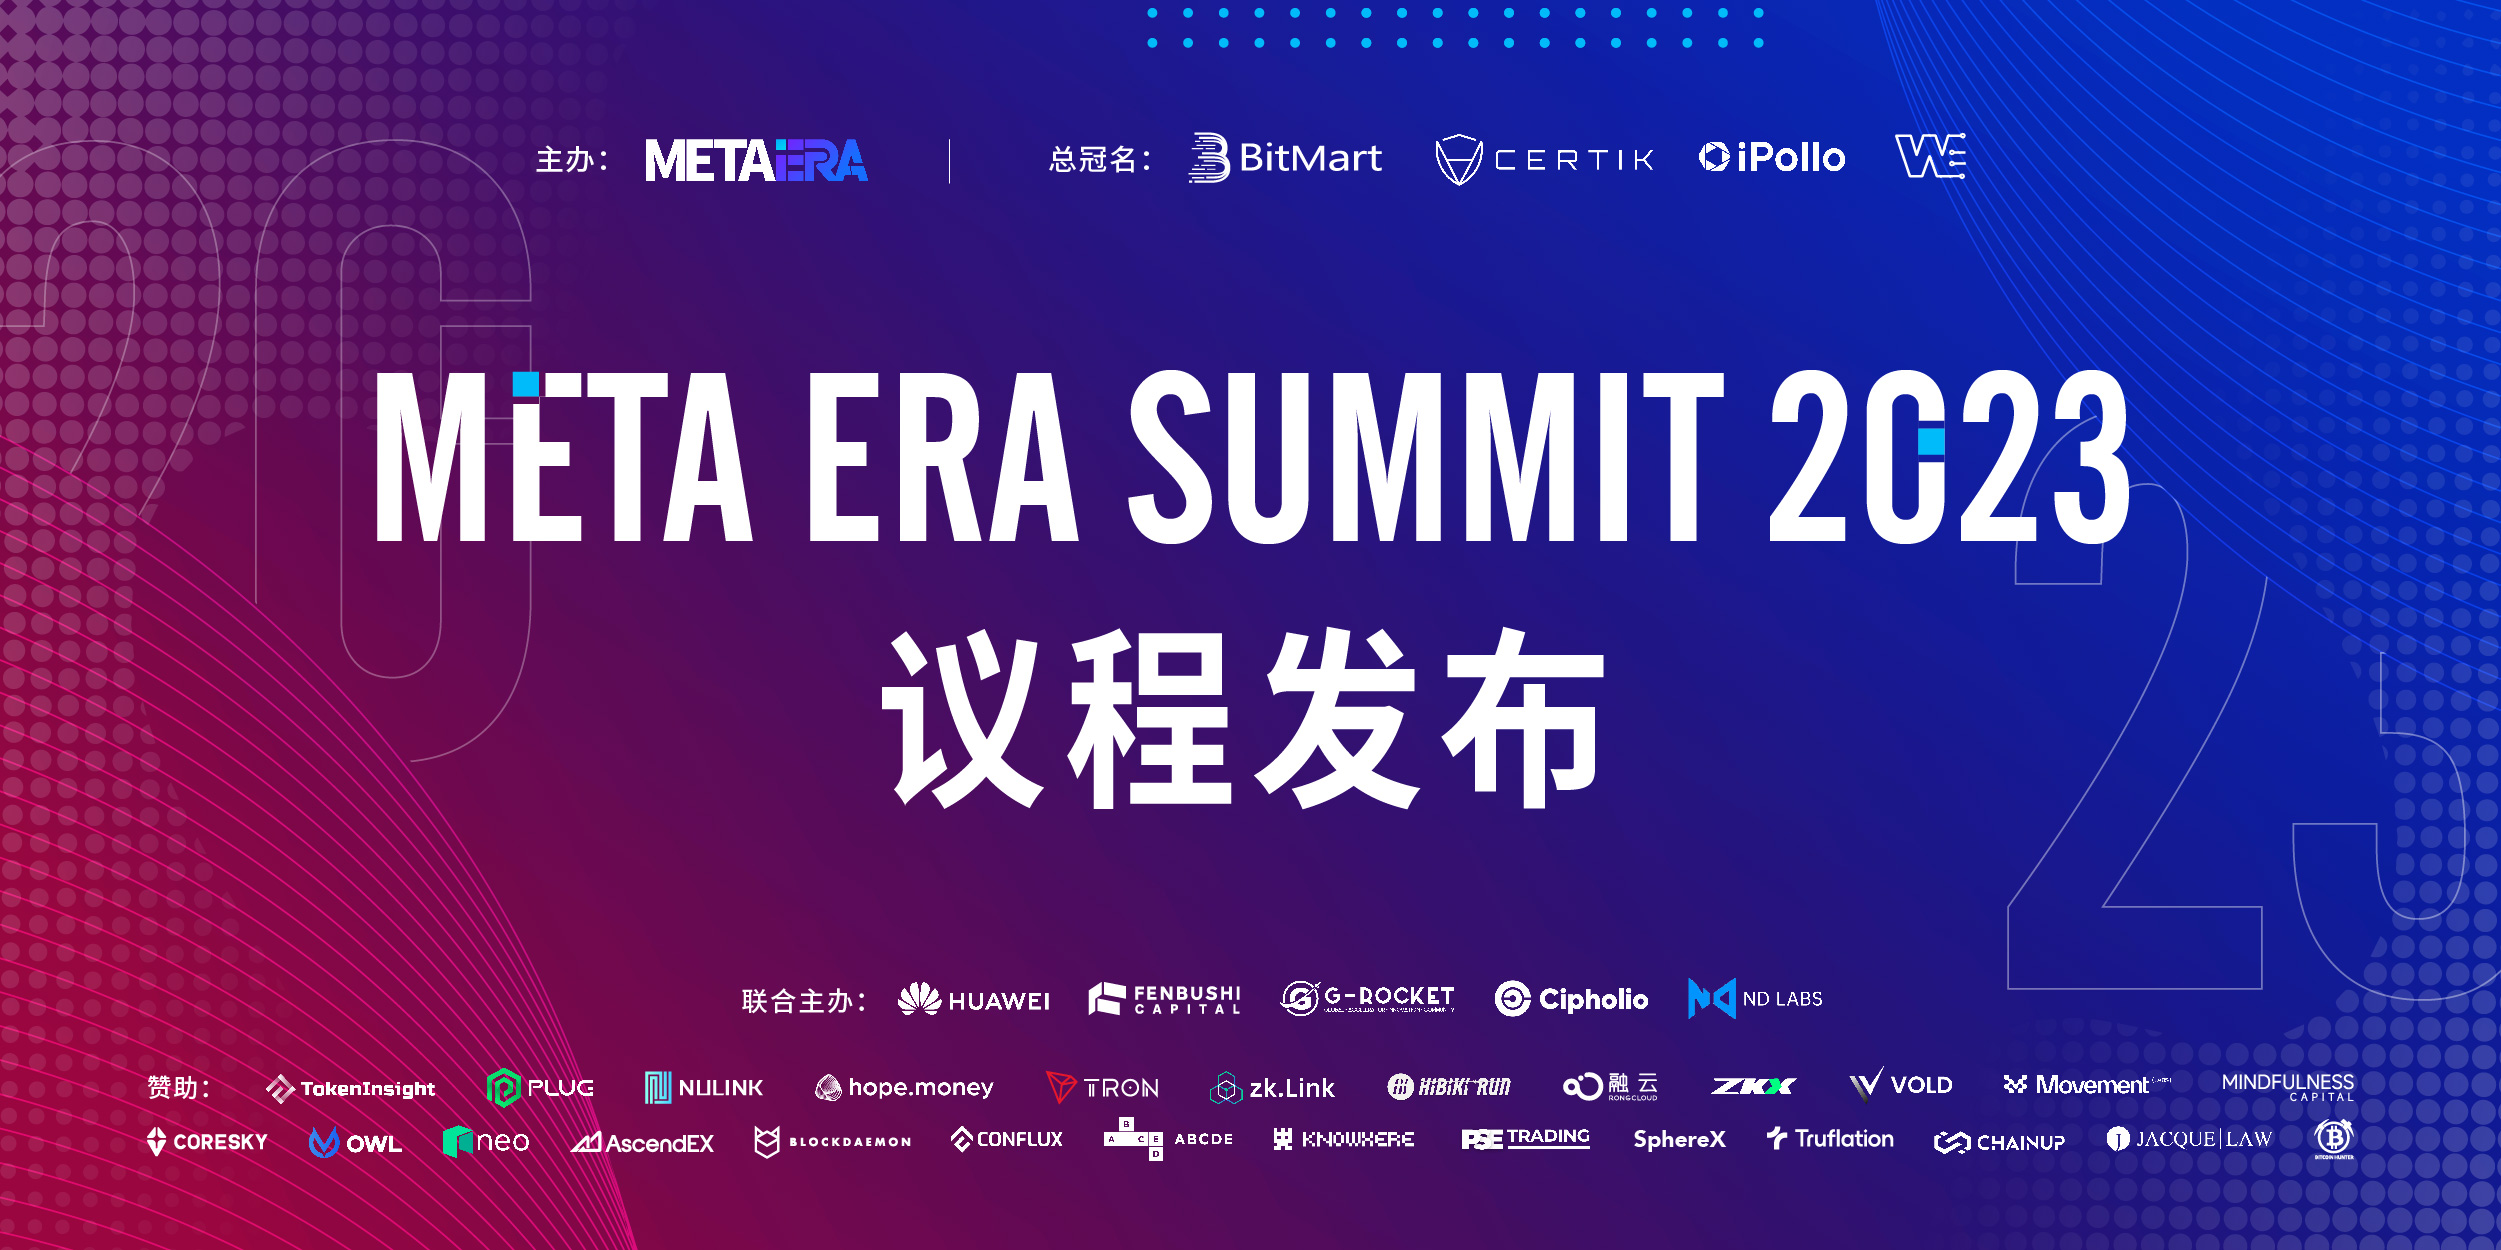 Meta Era Summit 2023-PR_Cover-cn.jpg